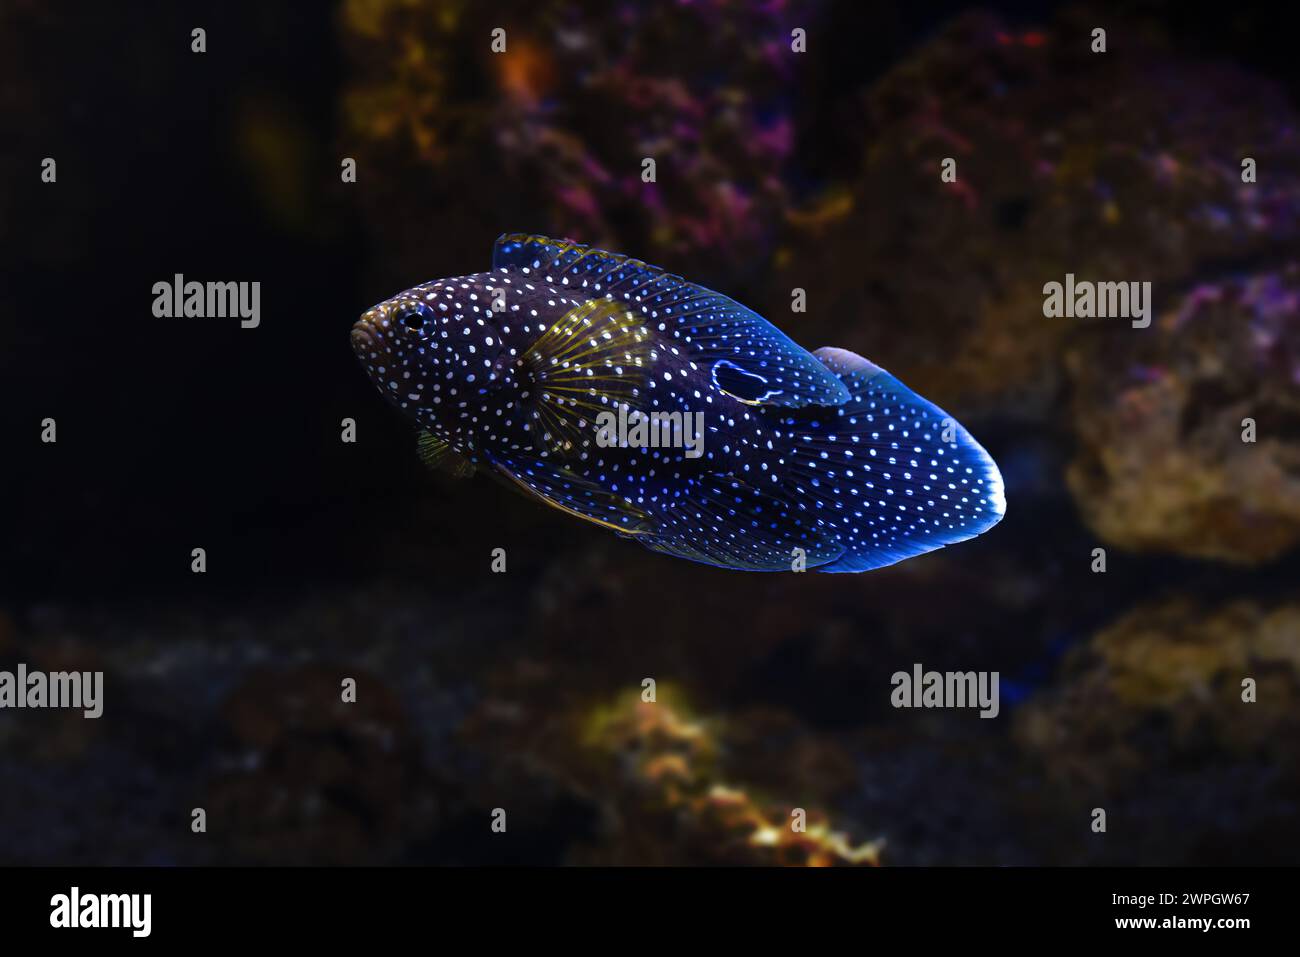 Comet (Calloplesiops altivelis) - Marine fish Stock Photo